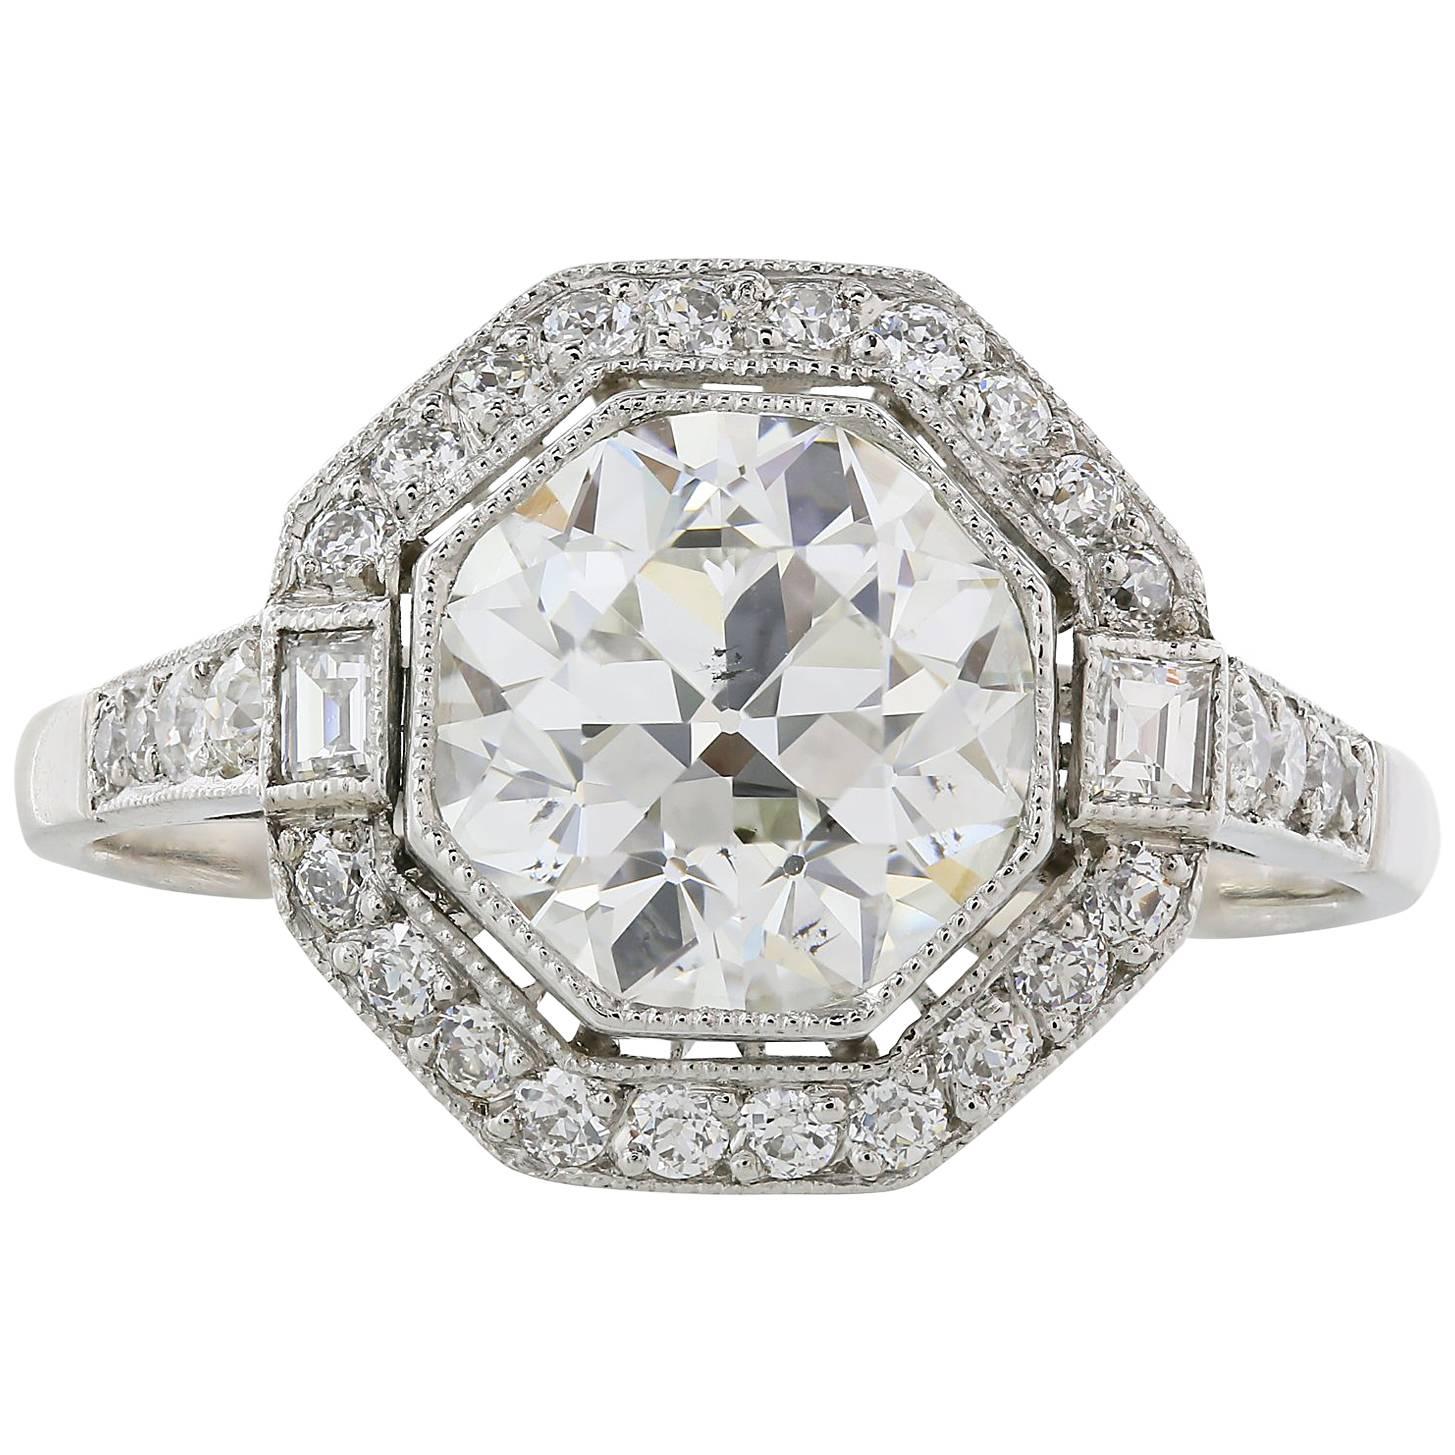 2.18 J/VS2 Carat Diamond Engagement Ring For Sale